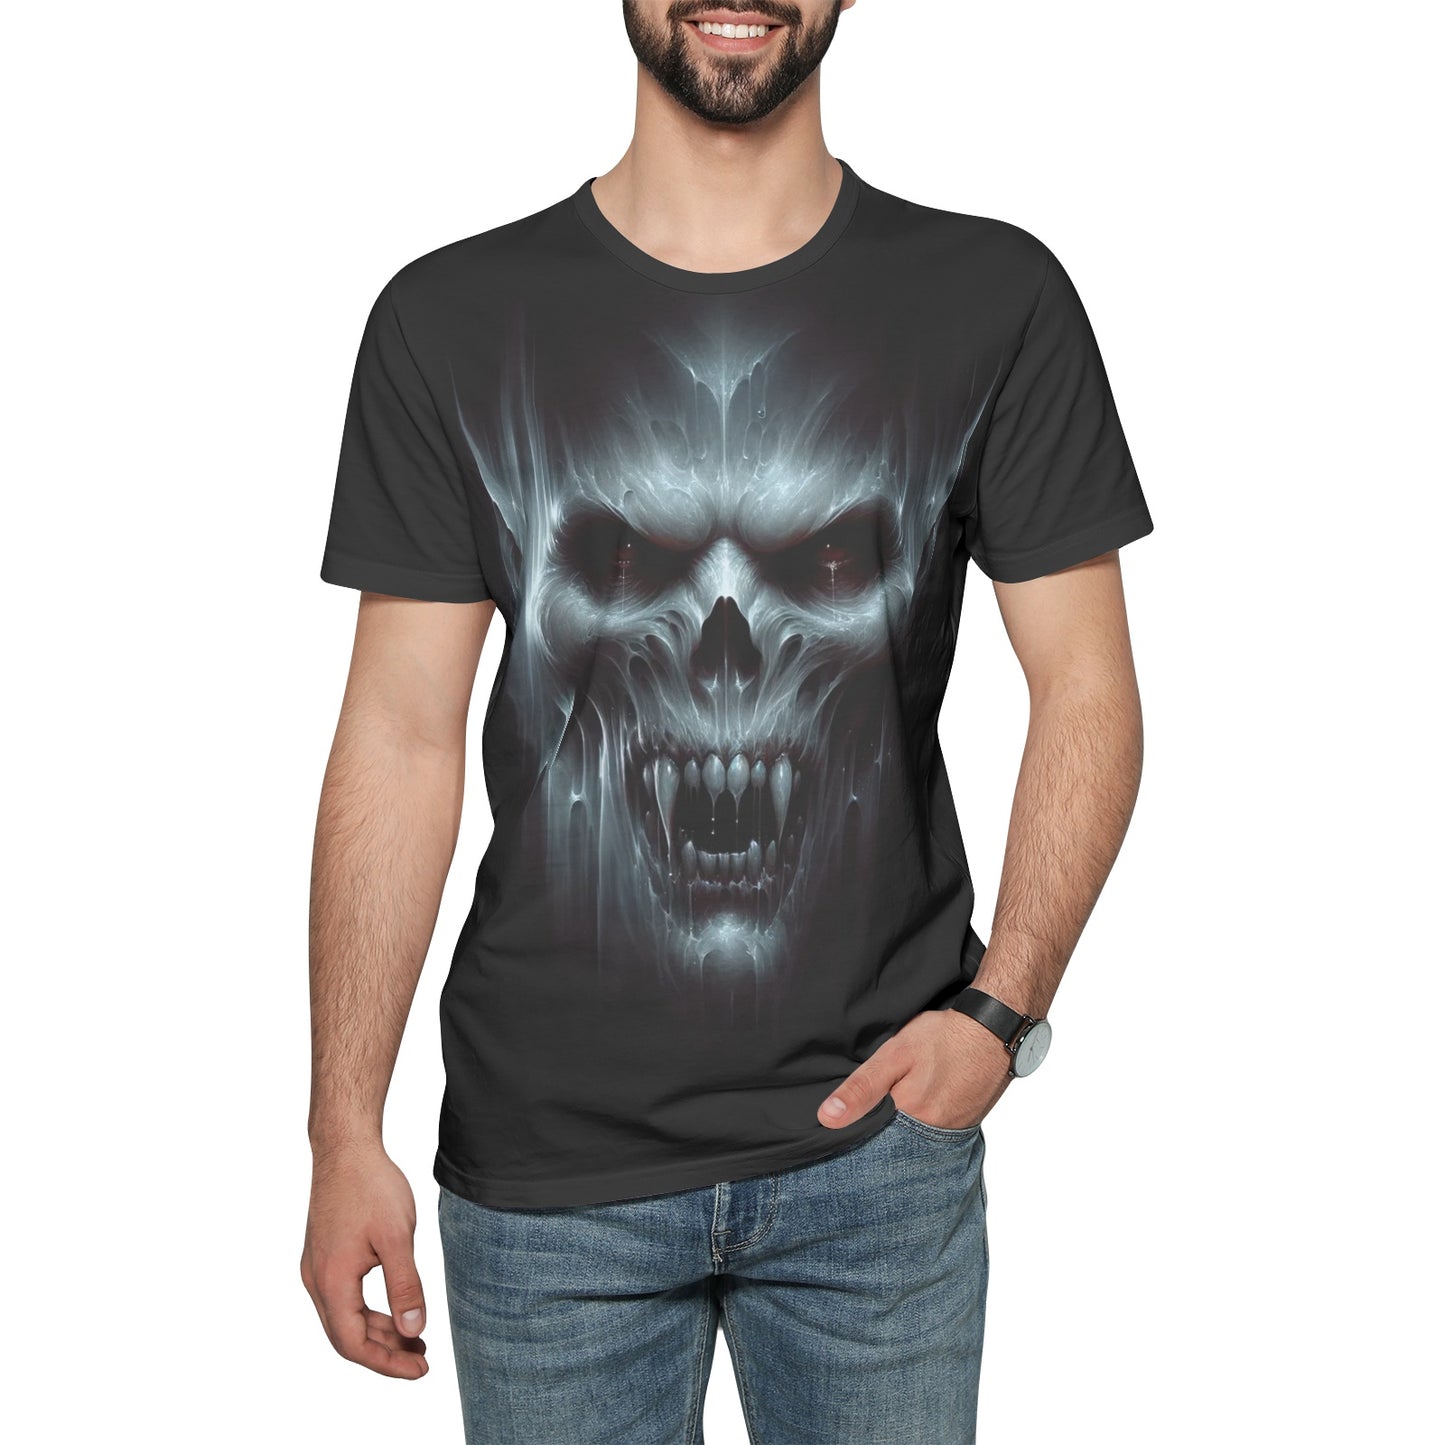 Vampire Spectre Tee - Unisex Cotton T-Shirt with Spectral Vampire Print